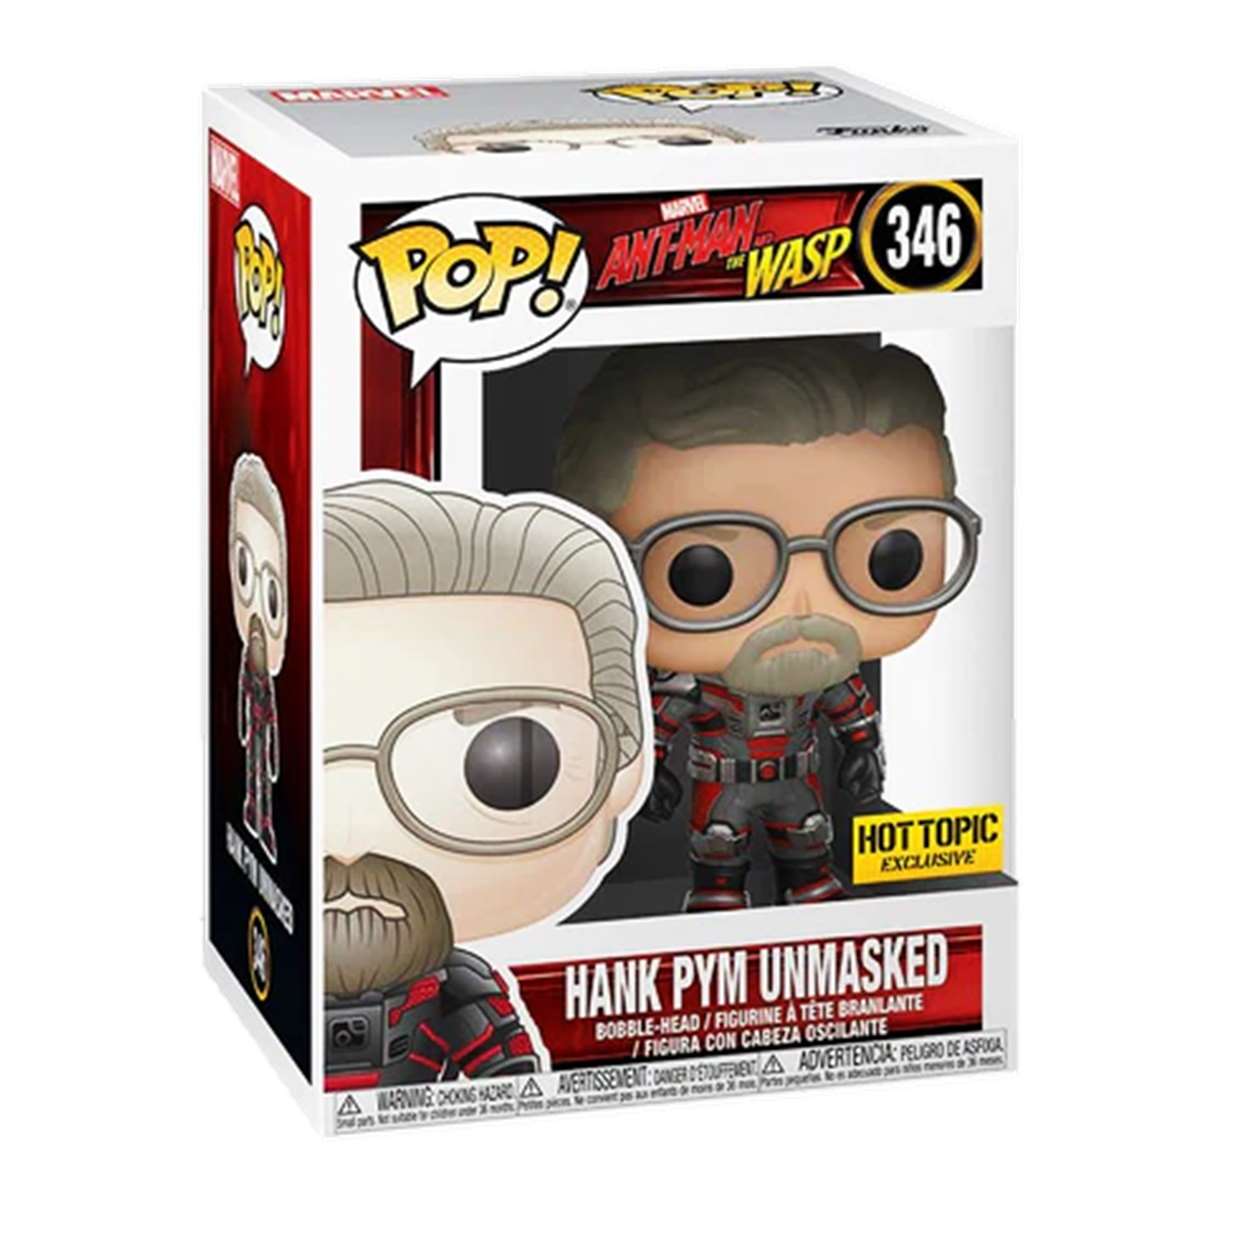 Hank Pym Unmasked #346 Funko Pop! Exclusivo Hot Topic